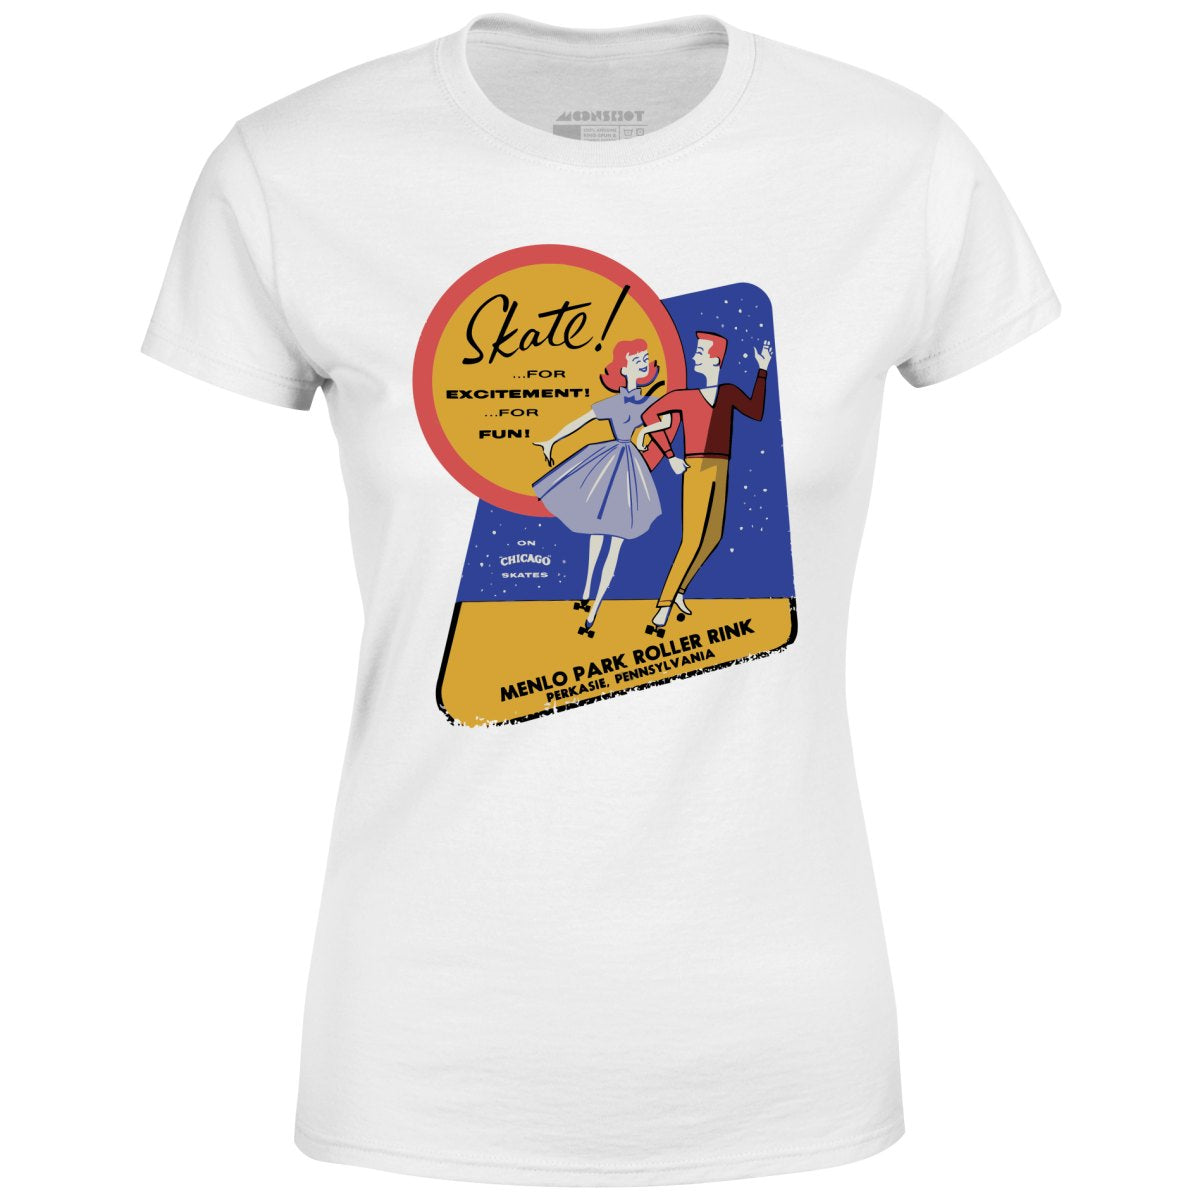 Menlo Park Roller Rink - Perkasie, PA - Vintage Roller Rink - Women's T-Shirt